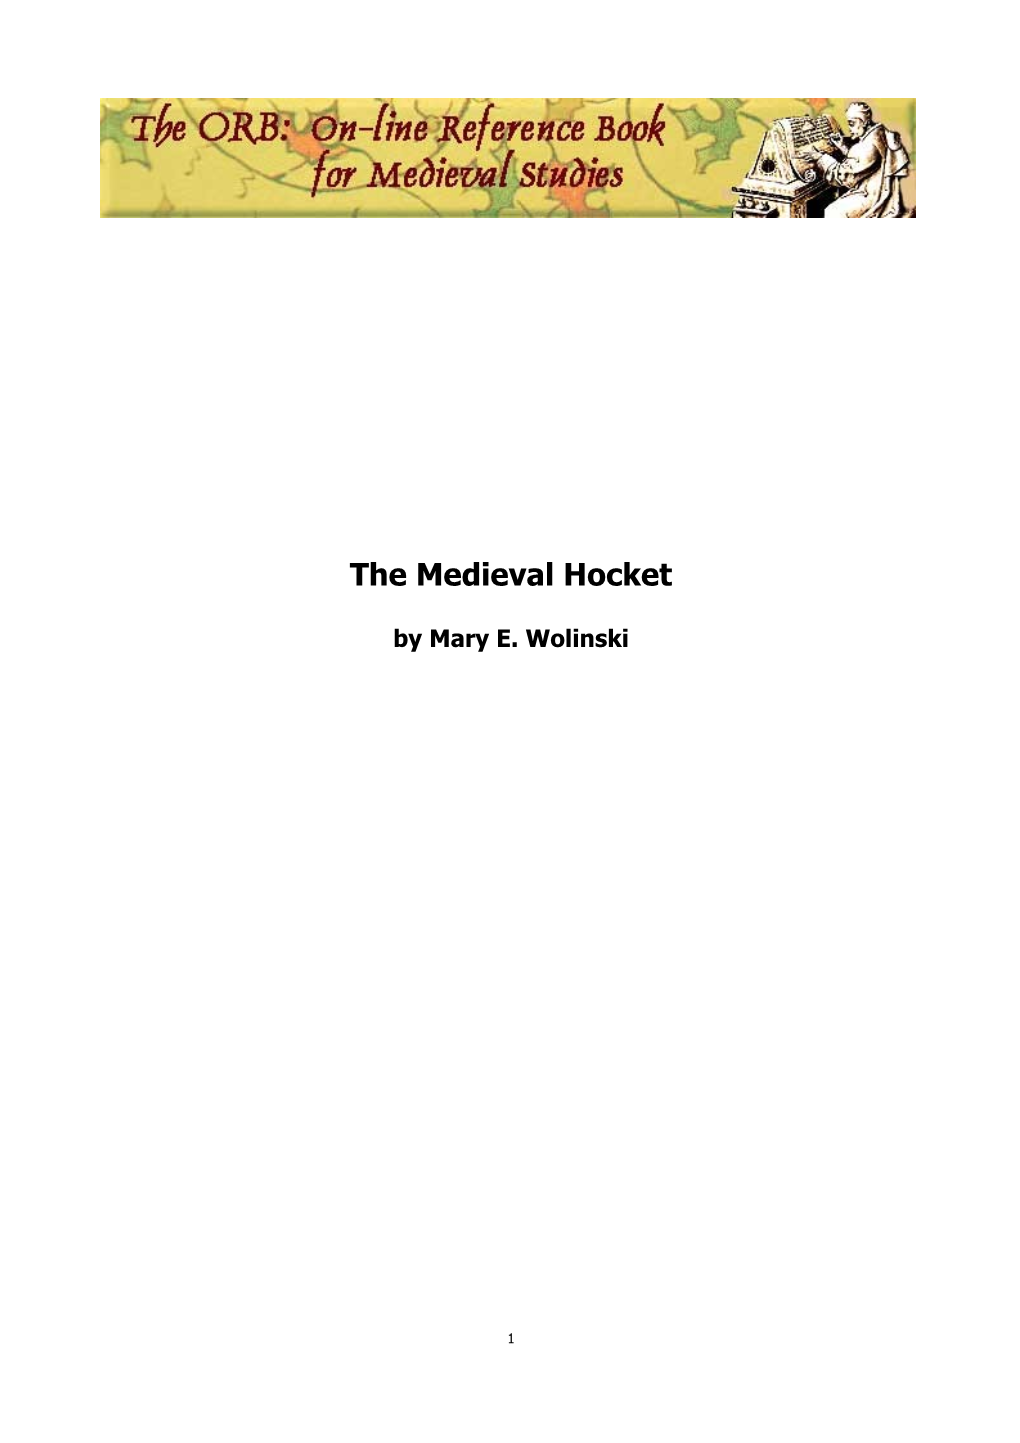 The Medieval Hocket